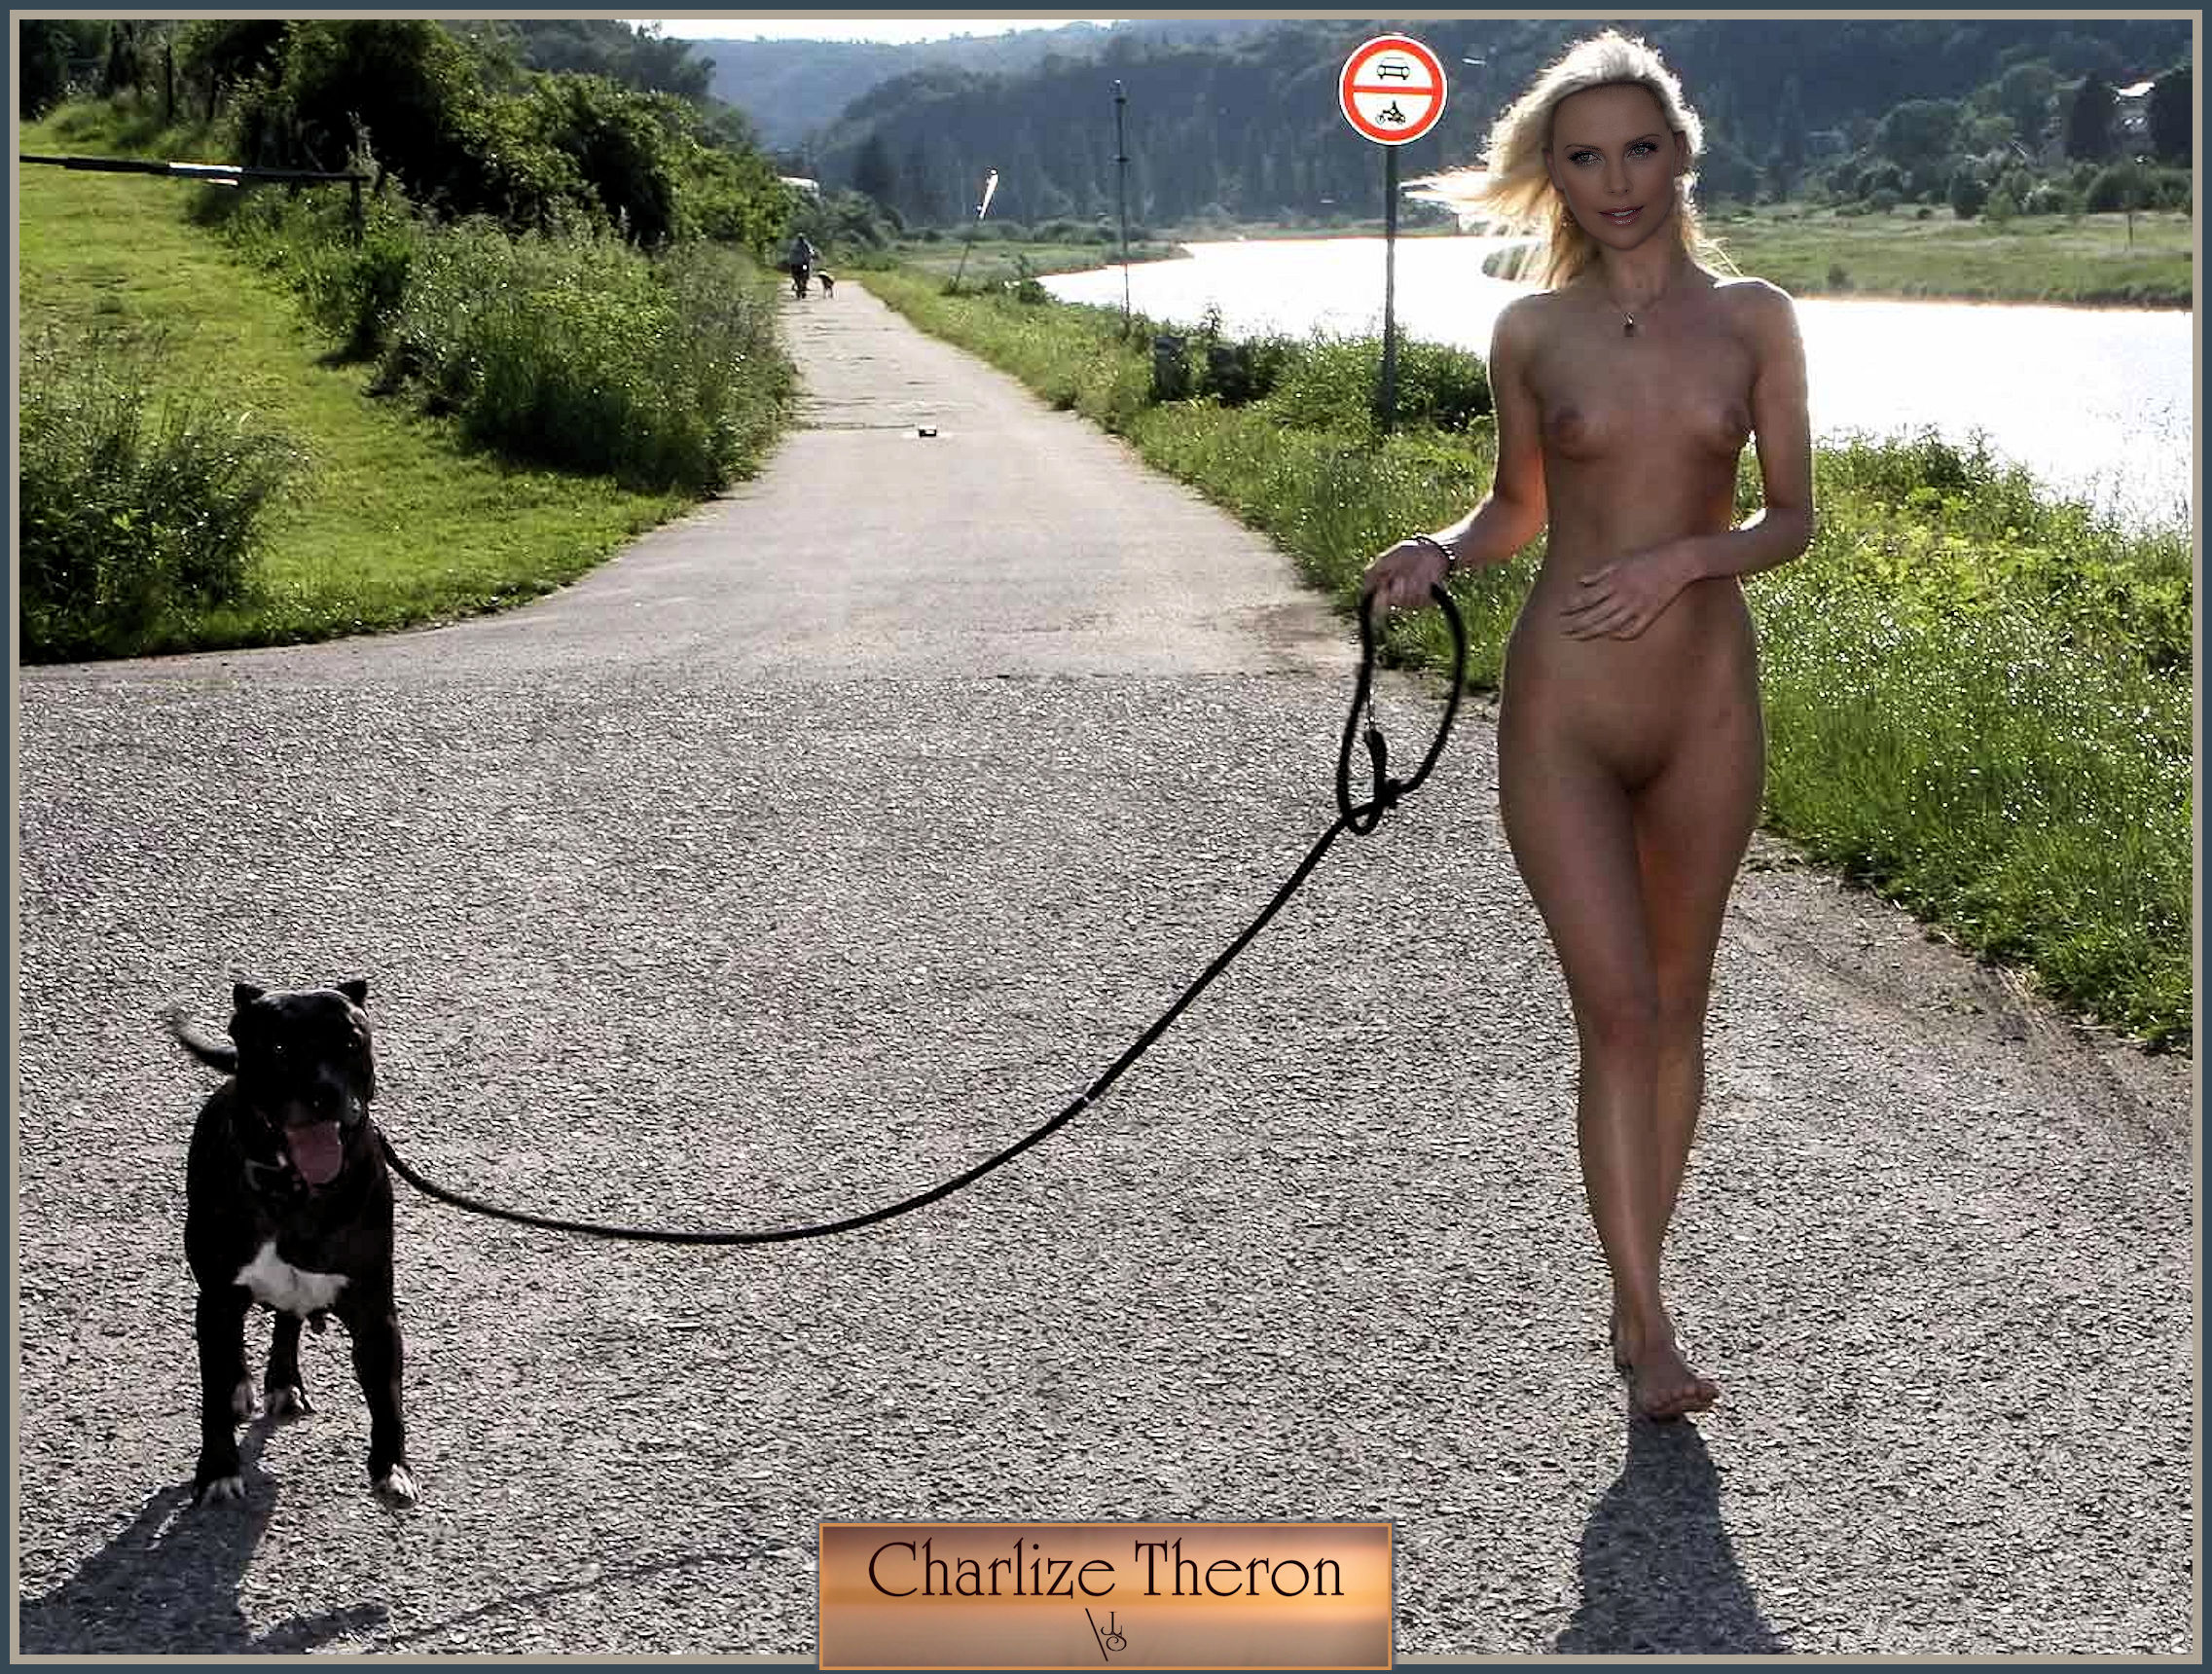 Charlize Theron Nude Walking with Dog, MyCelebrityFakes.com